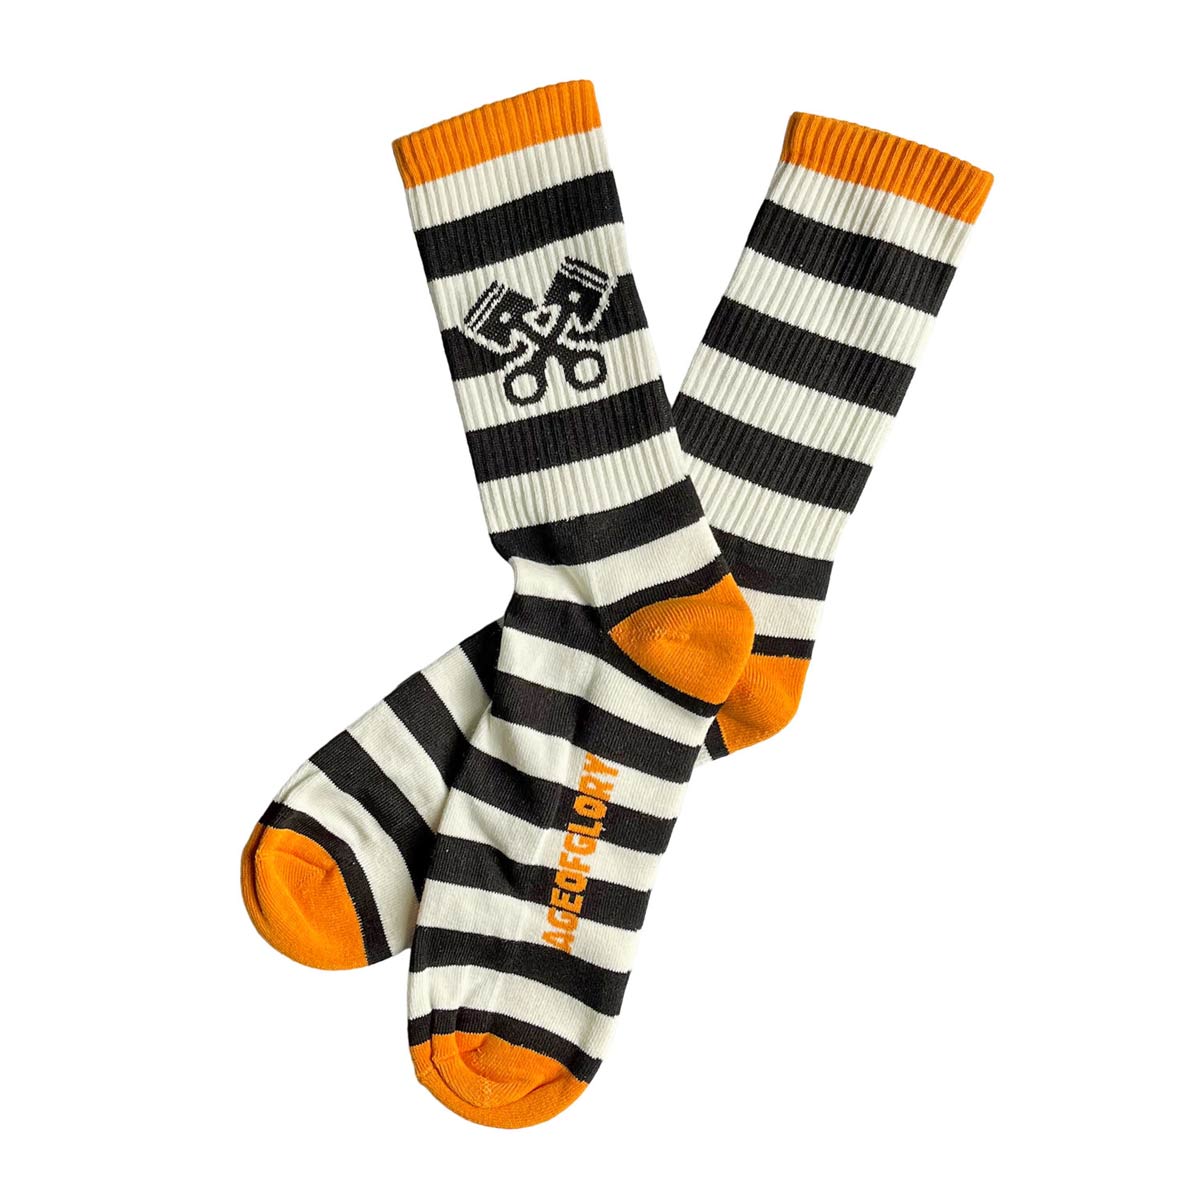 Age of Glory Stripes Socks Black/White/Orange